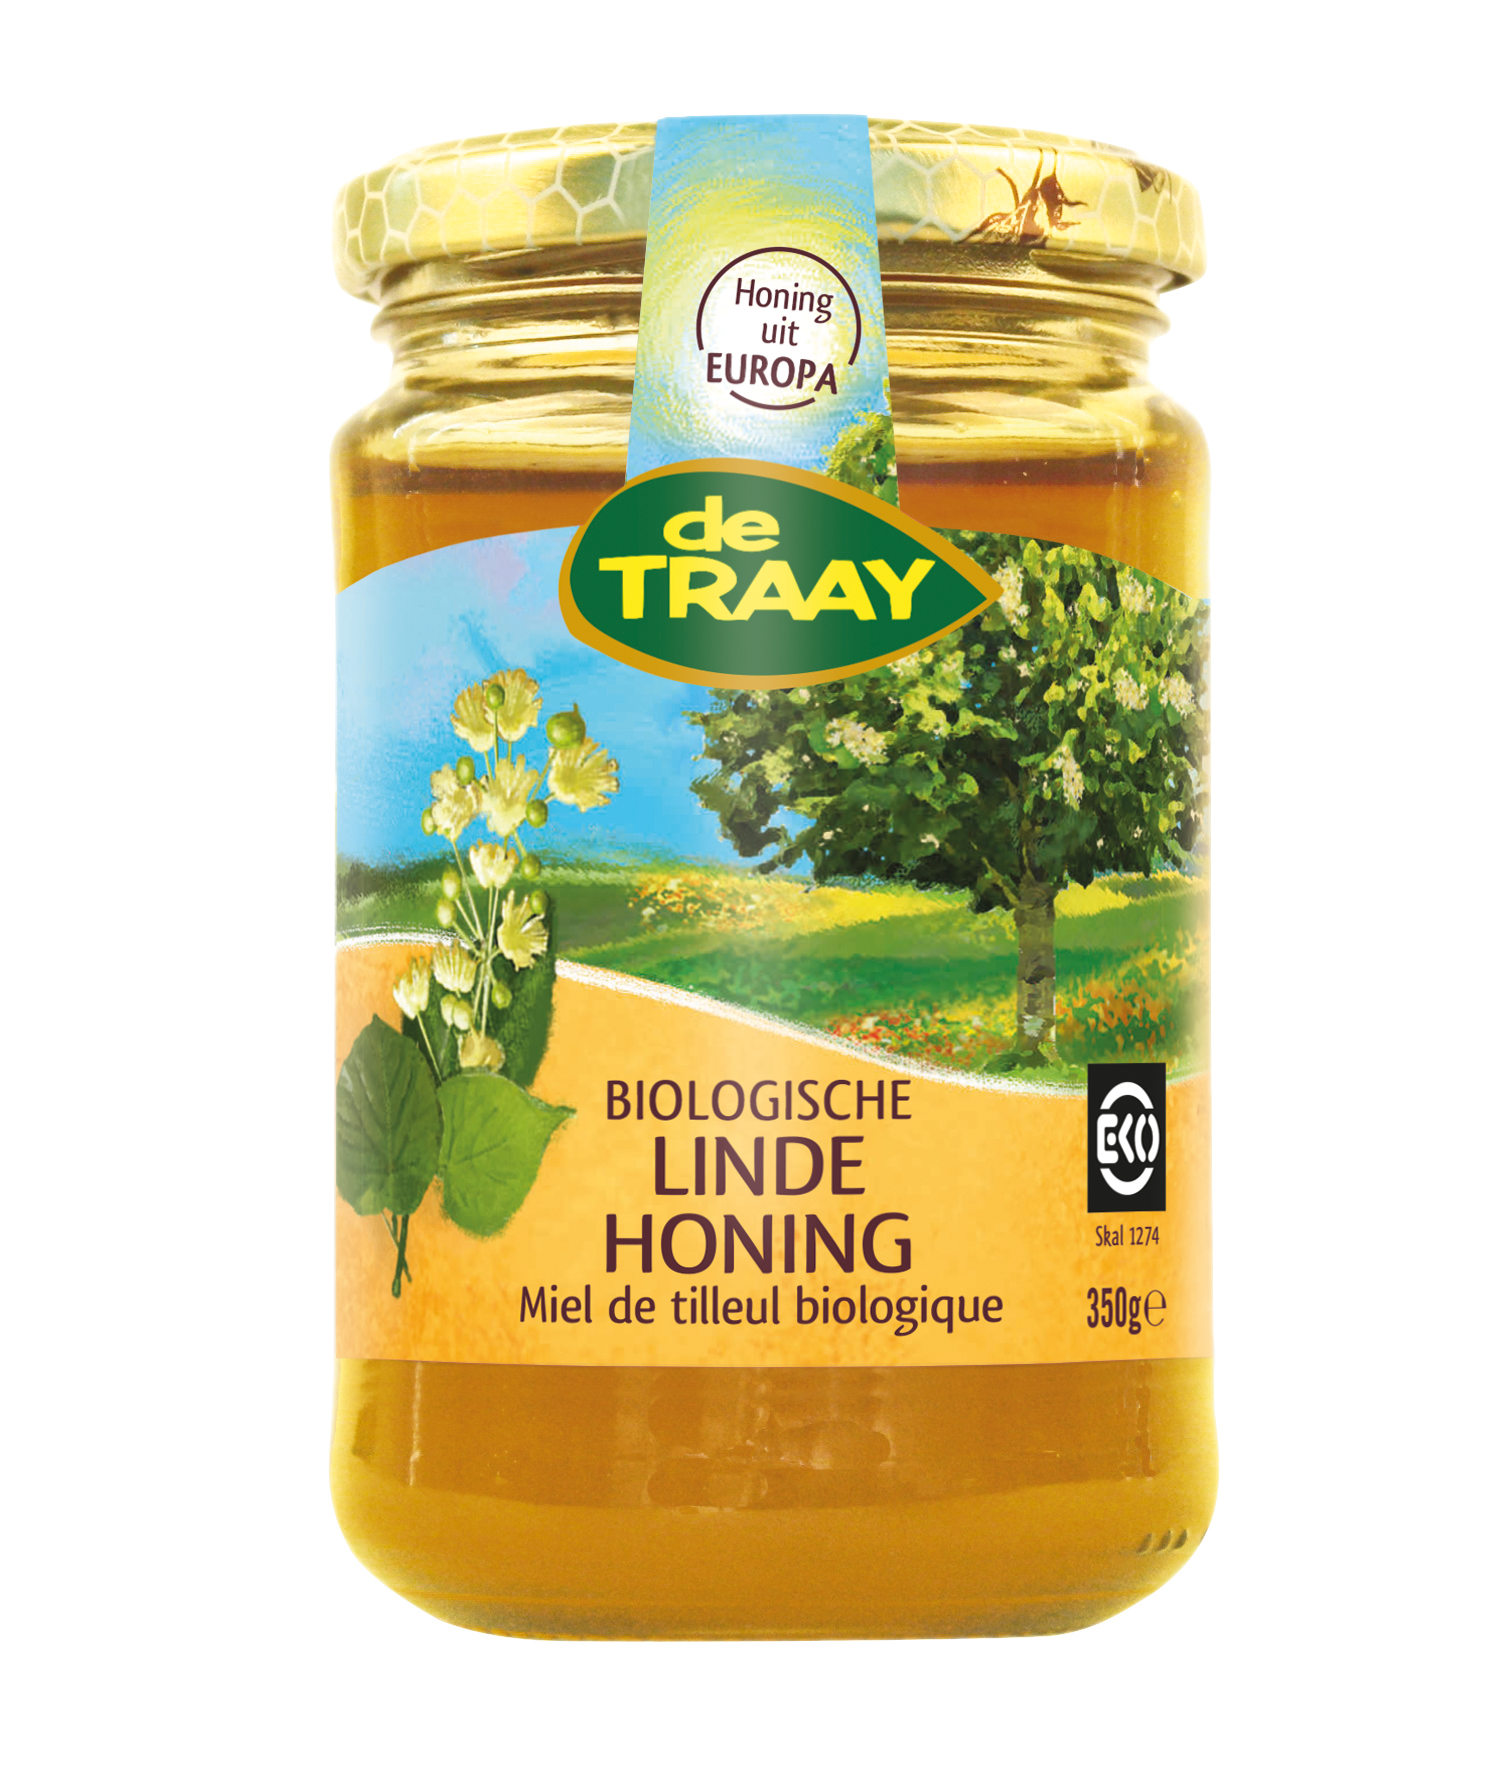 Organic linden honey